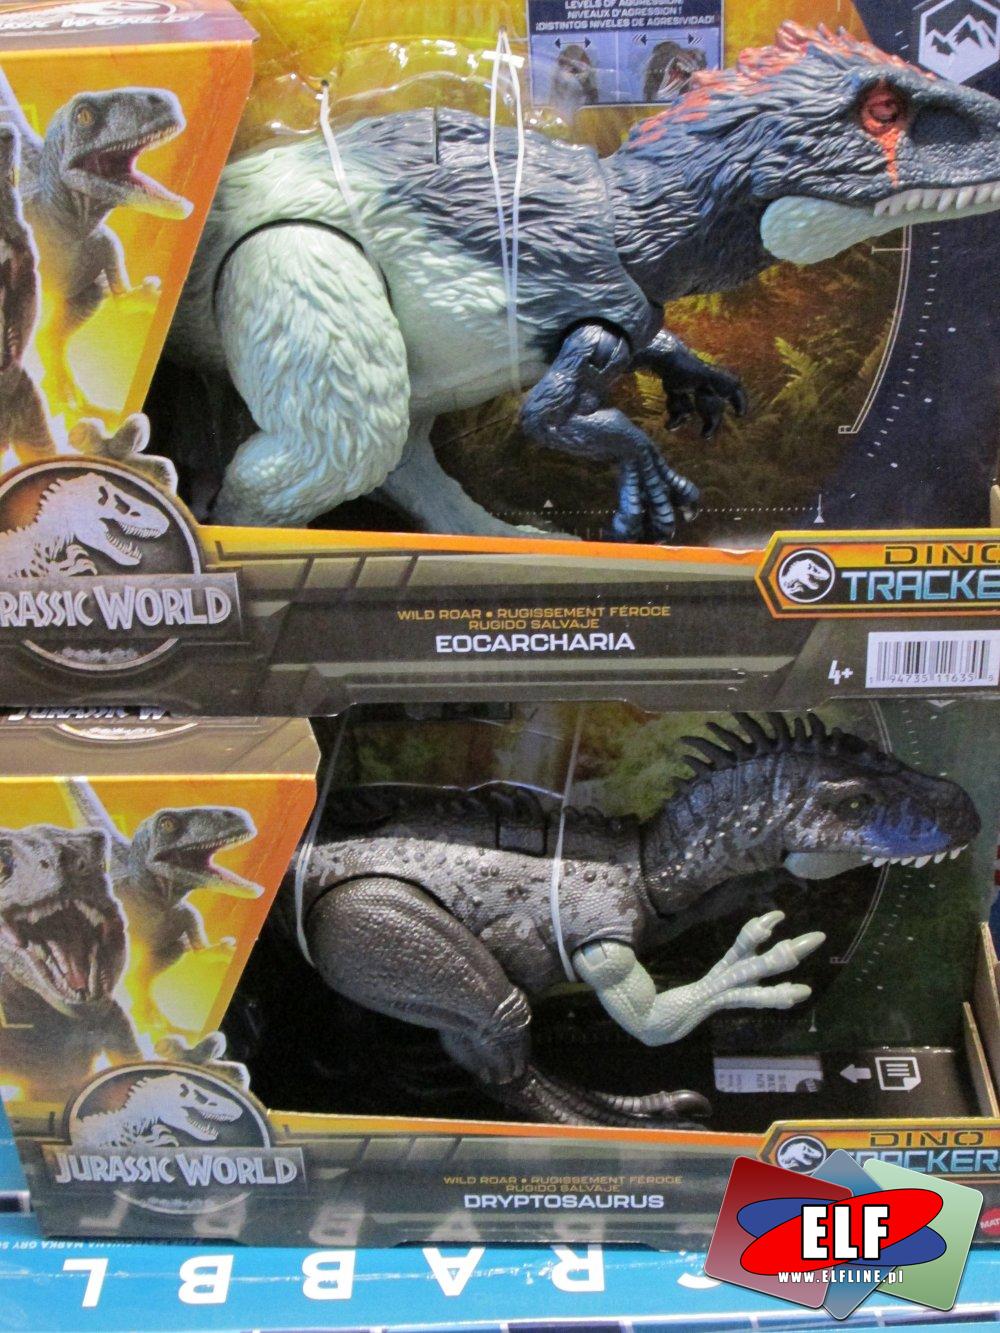 Jurassic World, Dinozaury, Dono Trackers, Diabloceratops, Kronosaurus, Eocarcharia, Dryptosaurus i inne dinozaury, figurki, zabawki